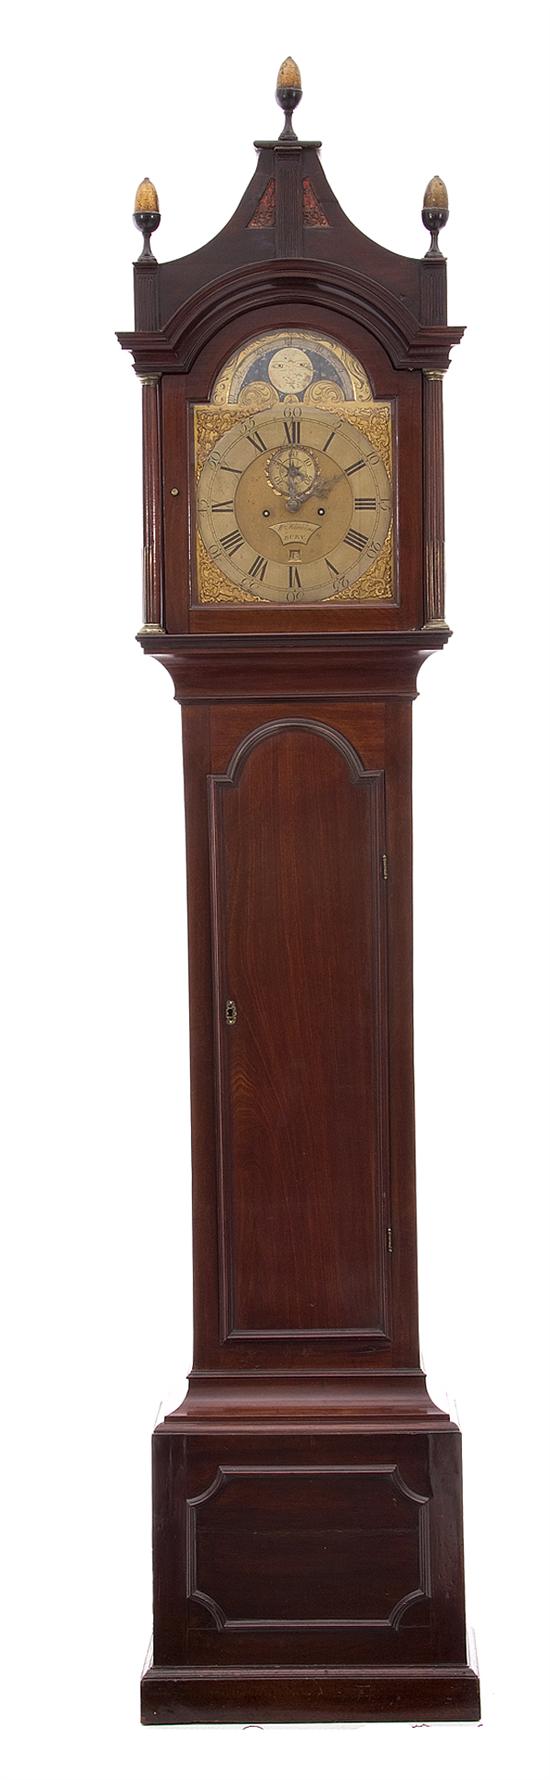 George III mahogany tall case clock 13a63c